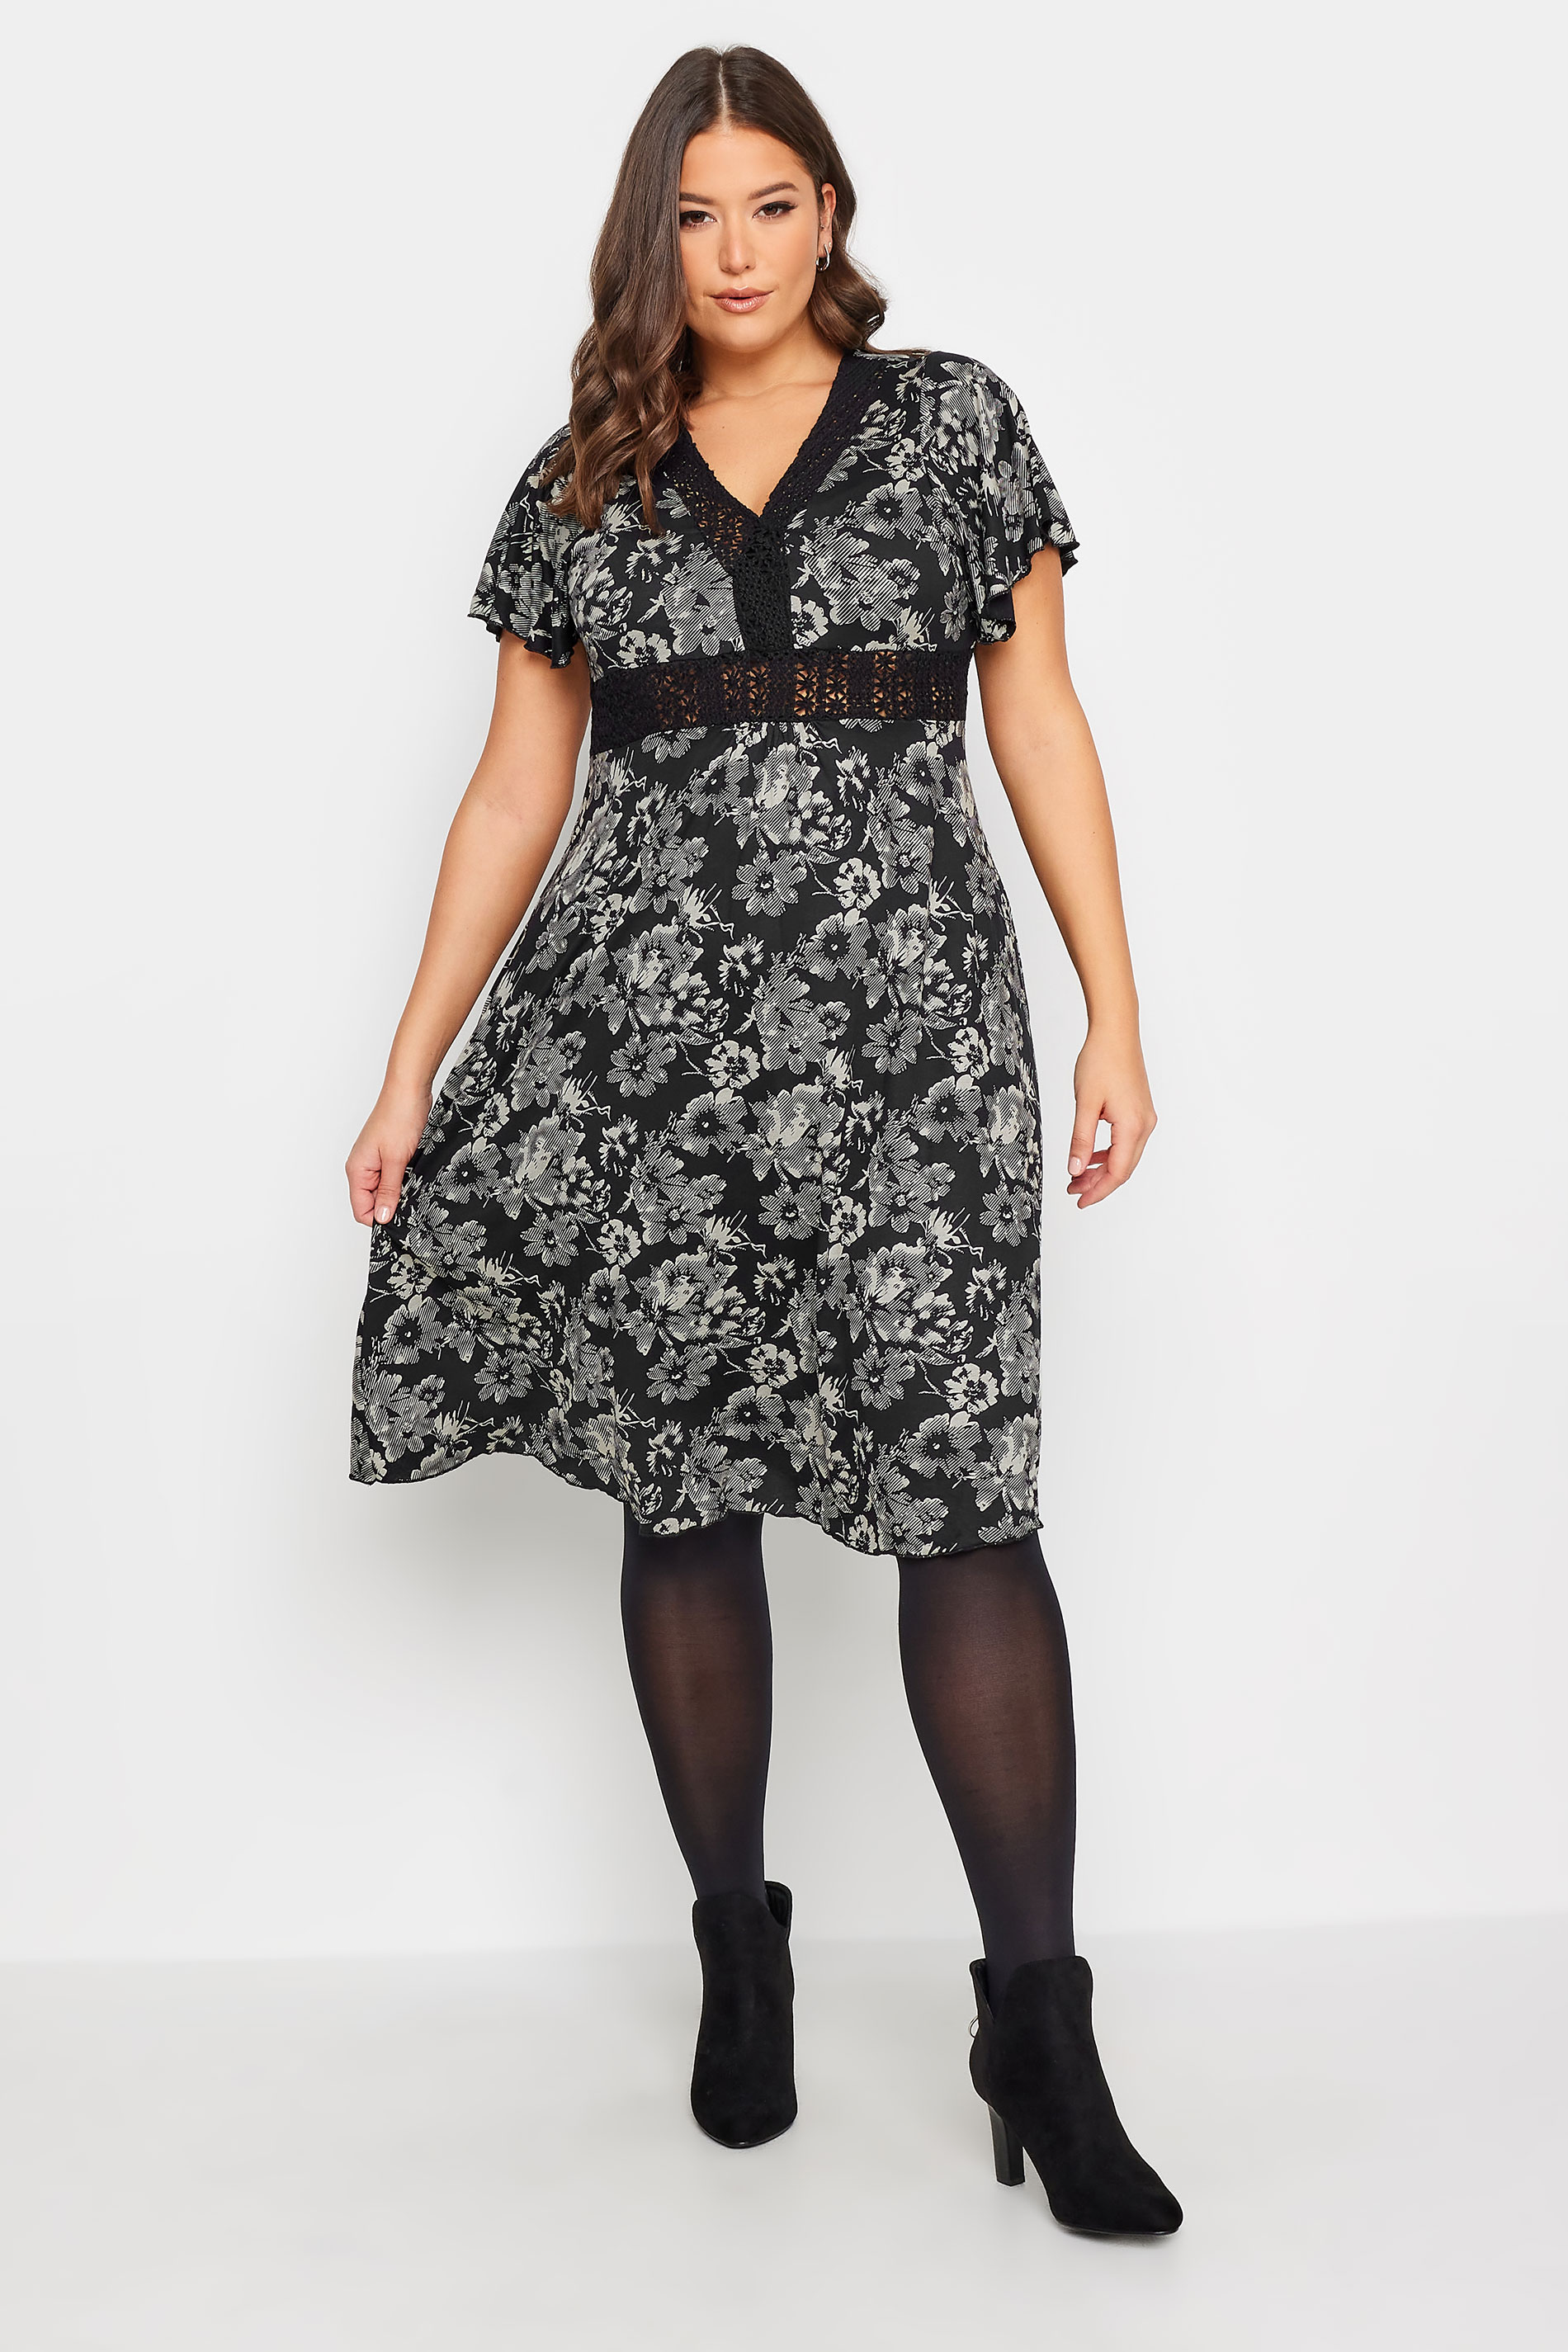 YOURS Plus Size Black & Cream Floral Print Lace Detail Dress | Yours Clothing 2